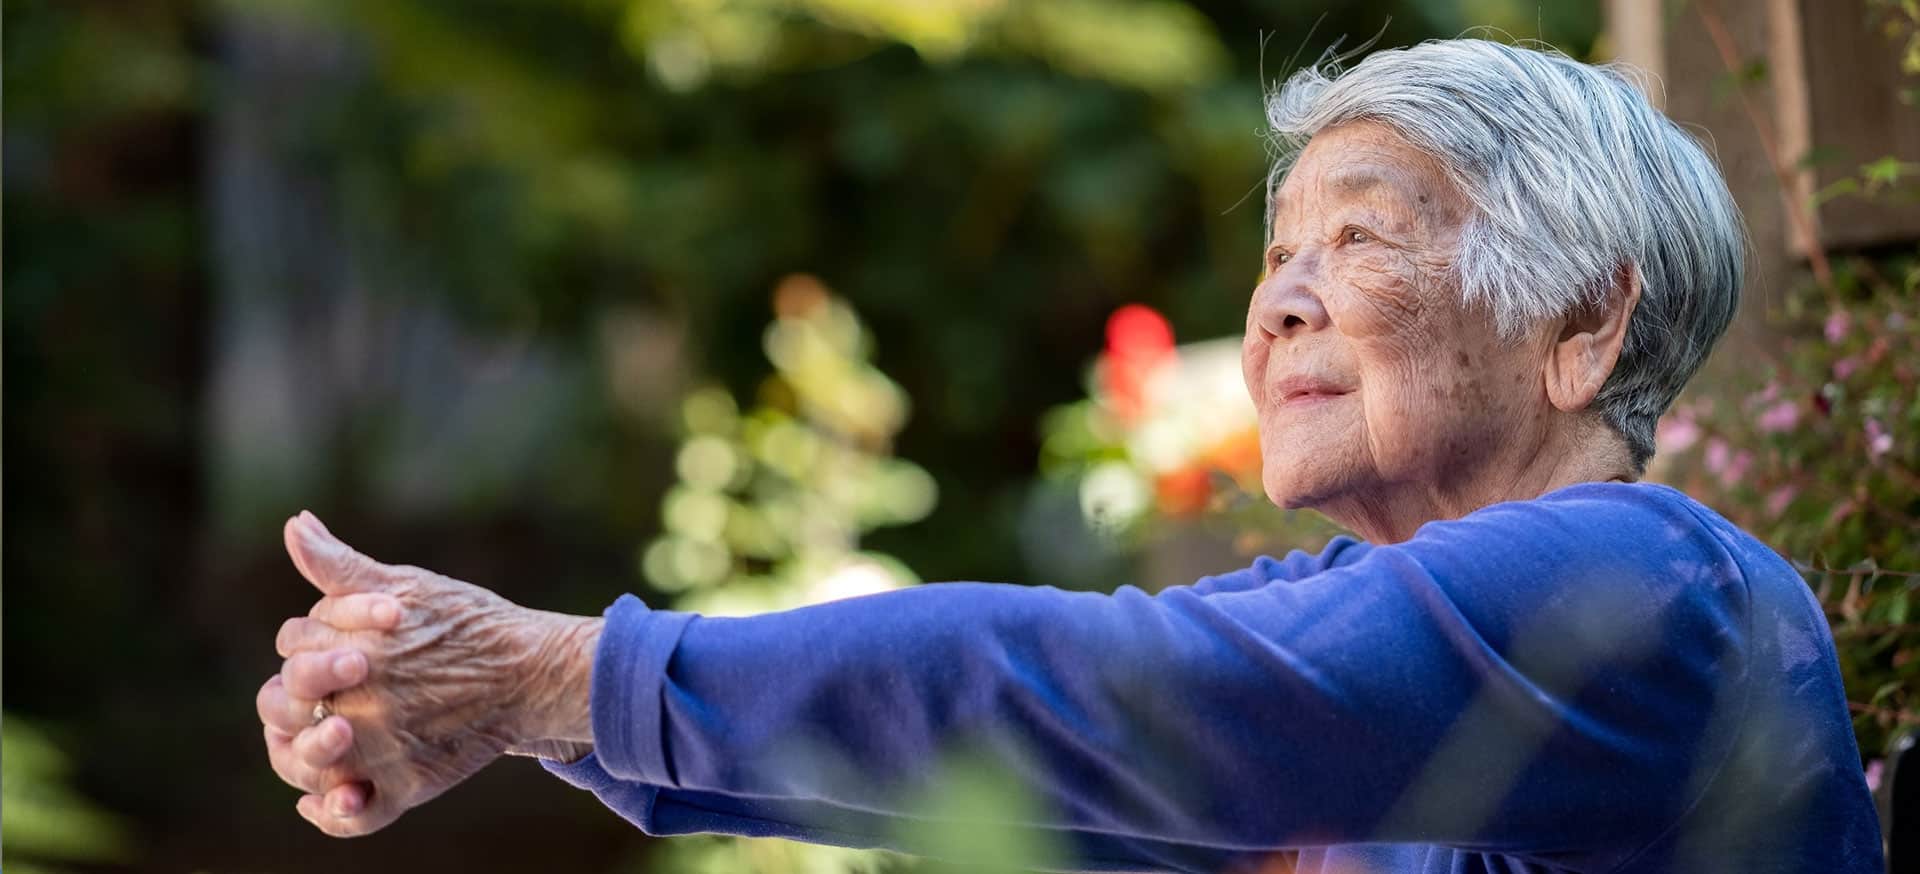 An older lady doing balance exercises outside.